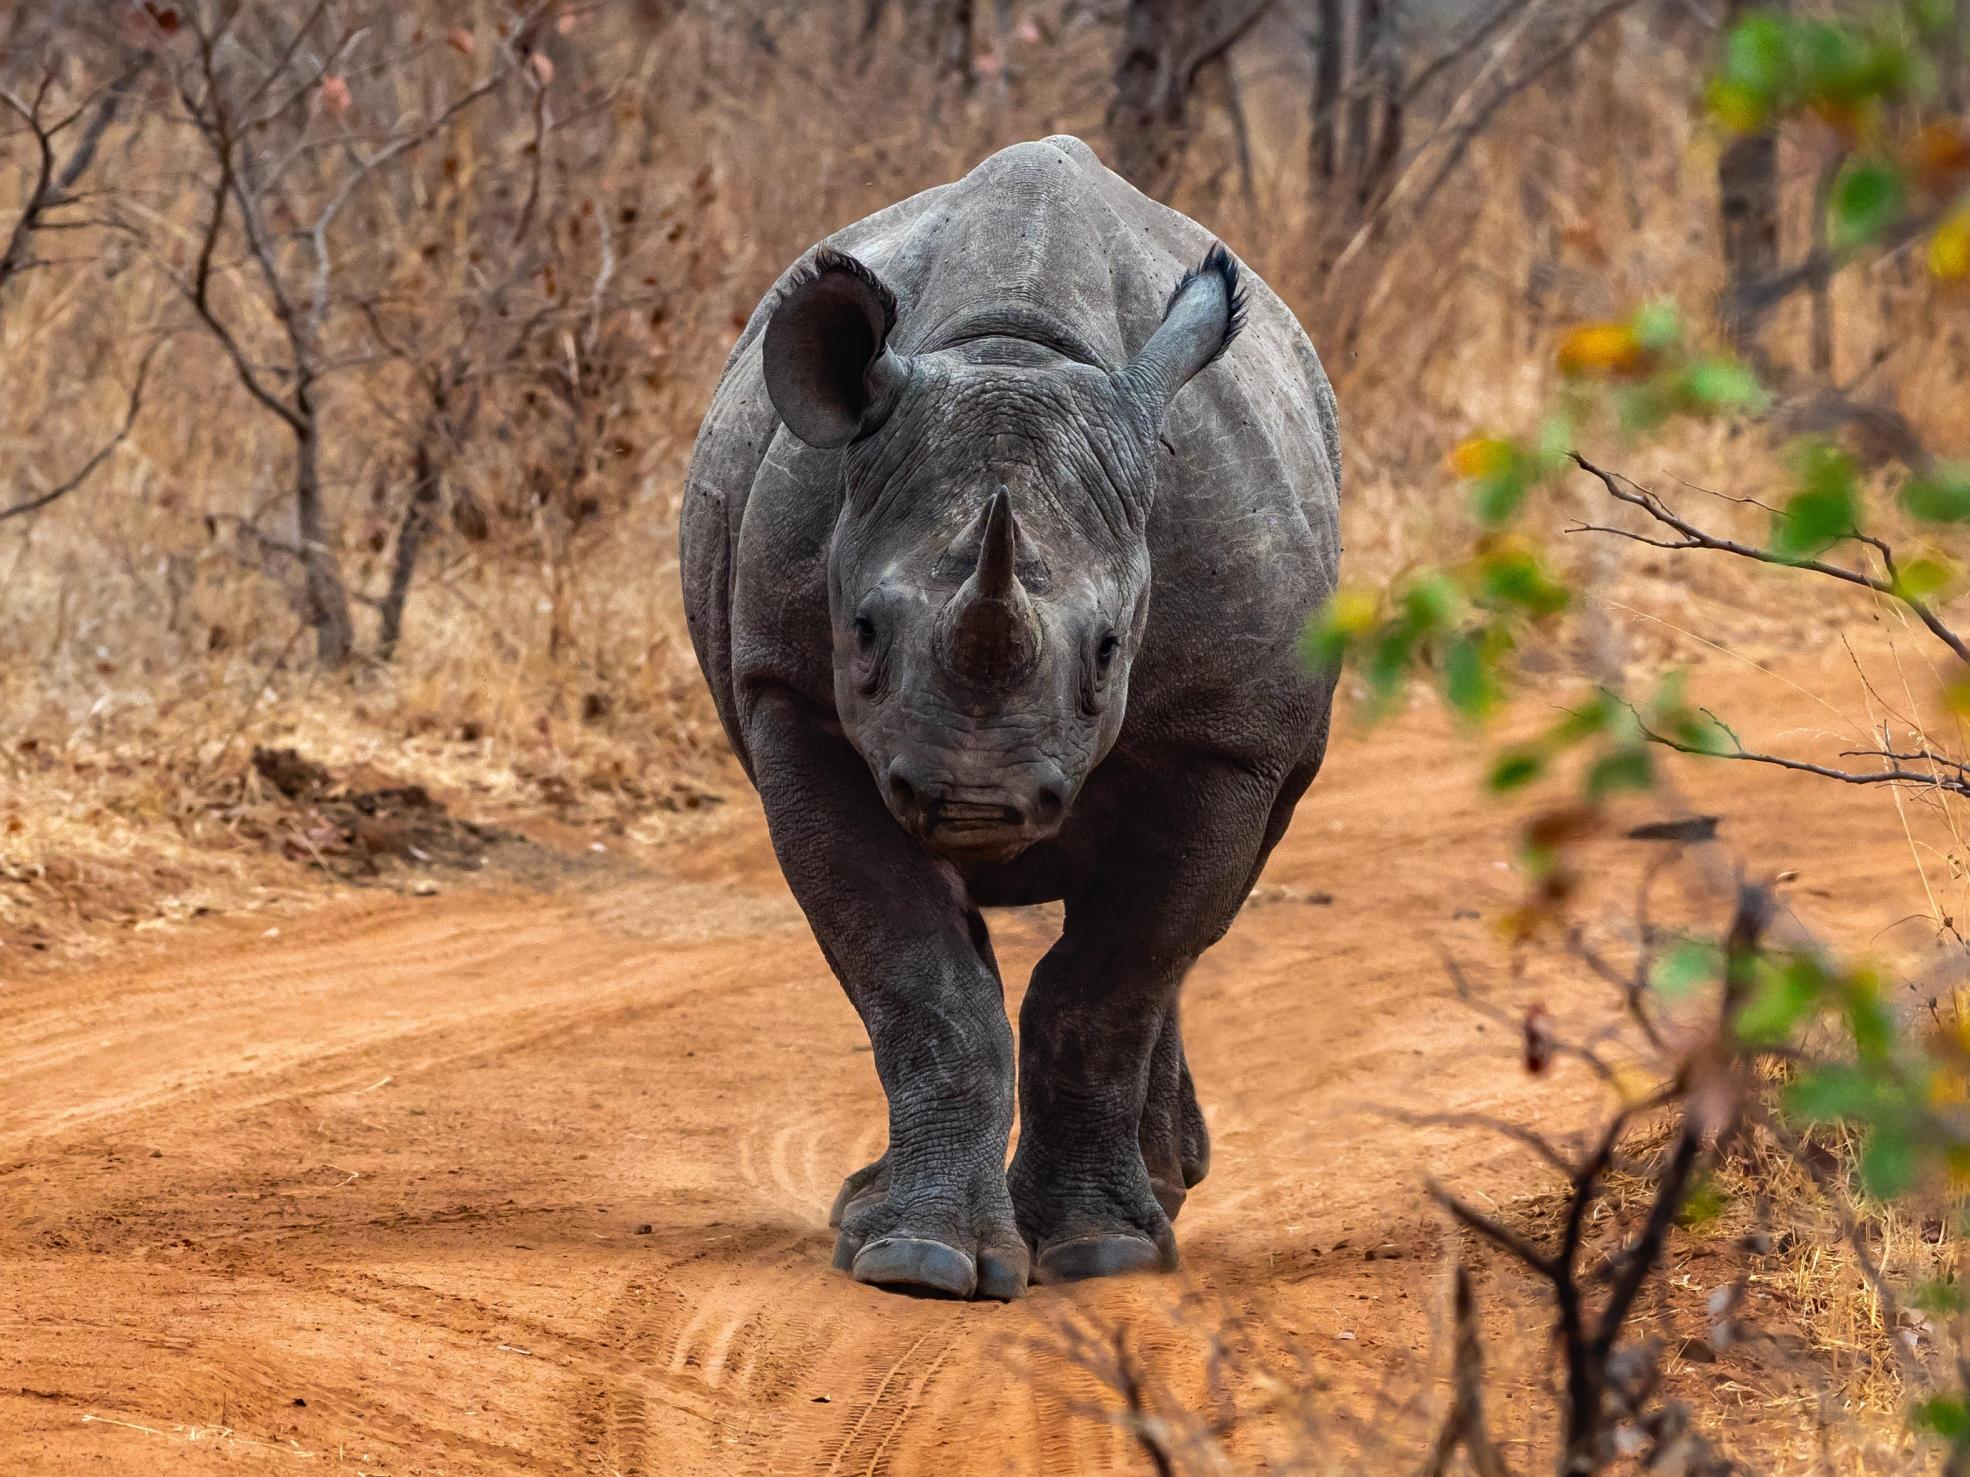 White rhinos find sanctuary in Hwange, Zimbabwe | The Australian